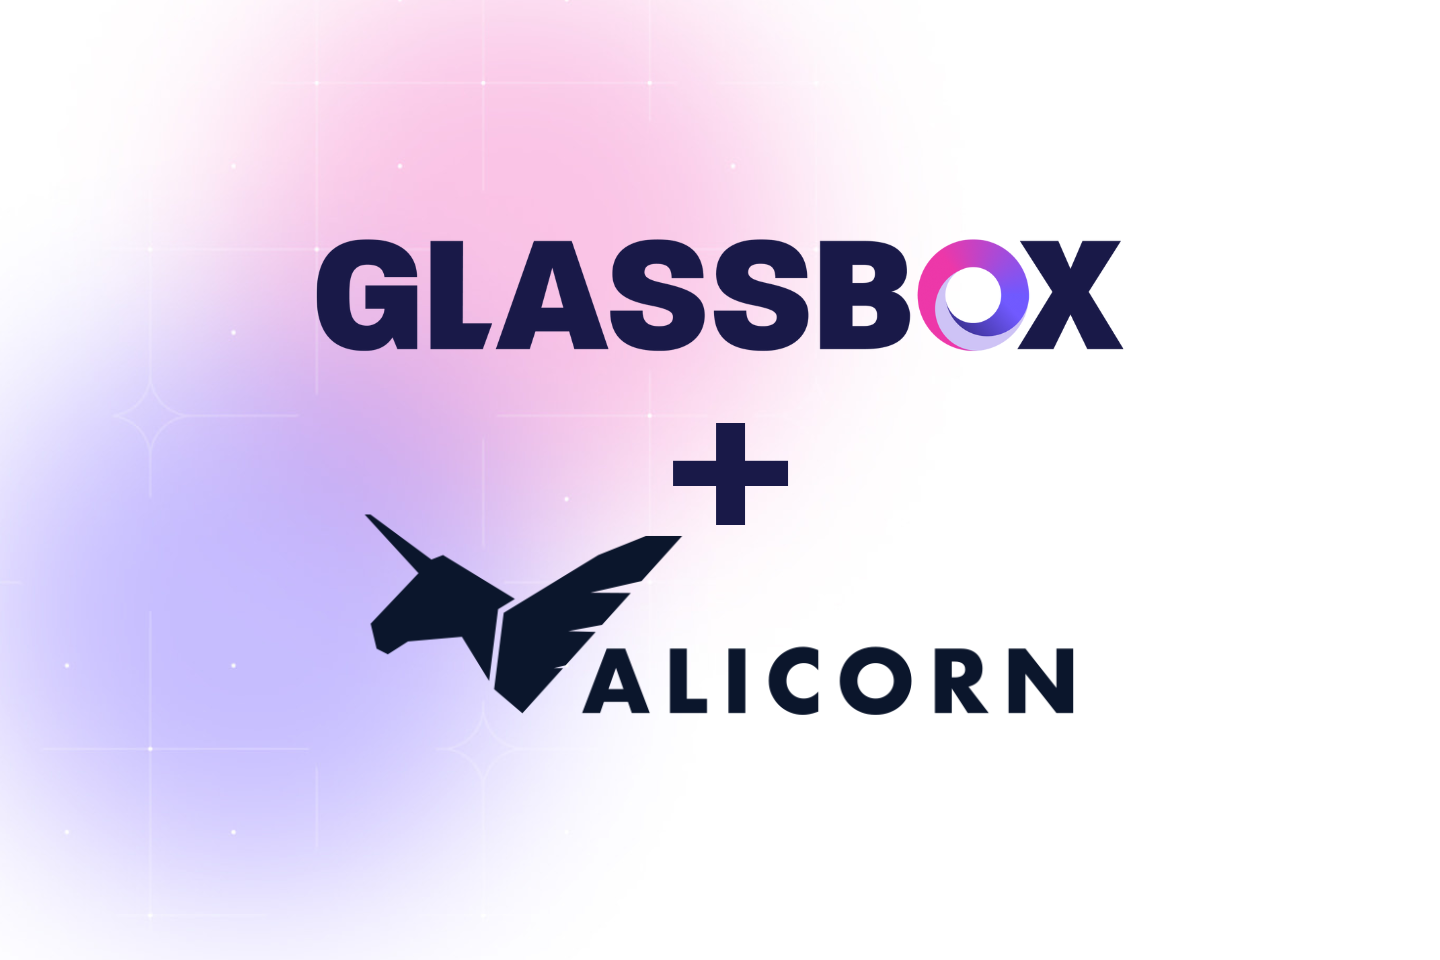 Glassbox Alicorn Newsroom